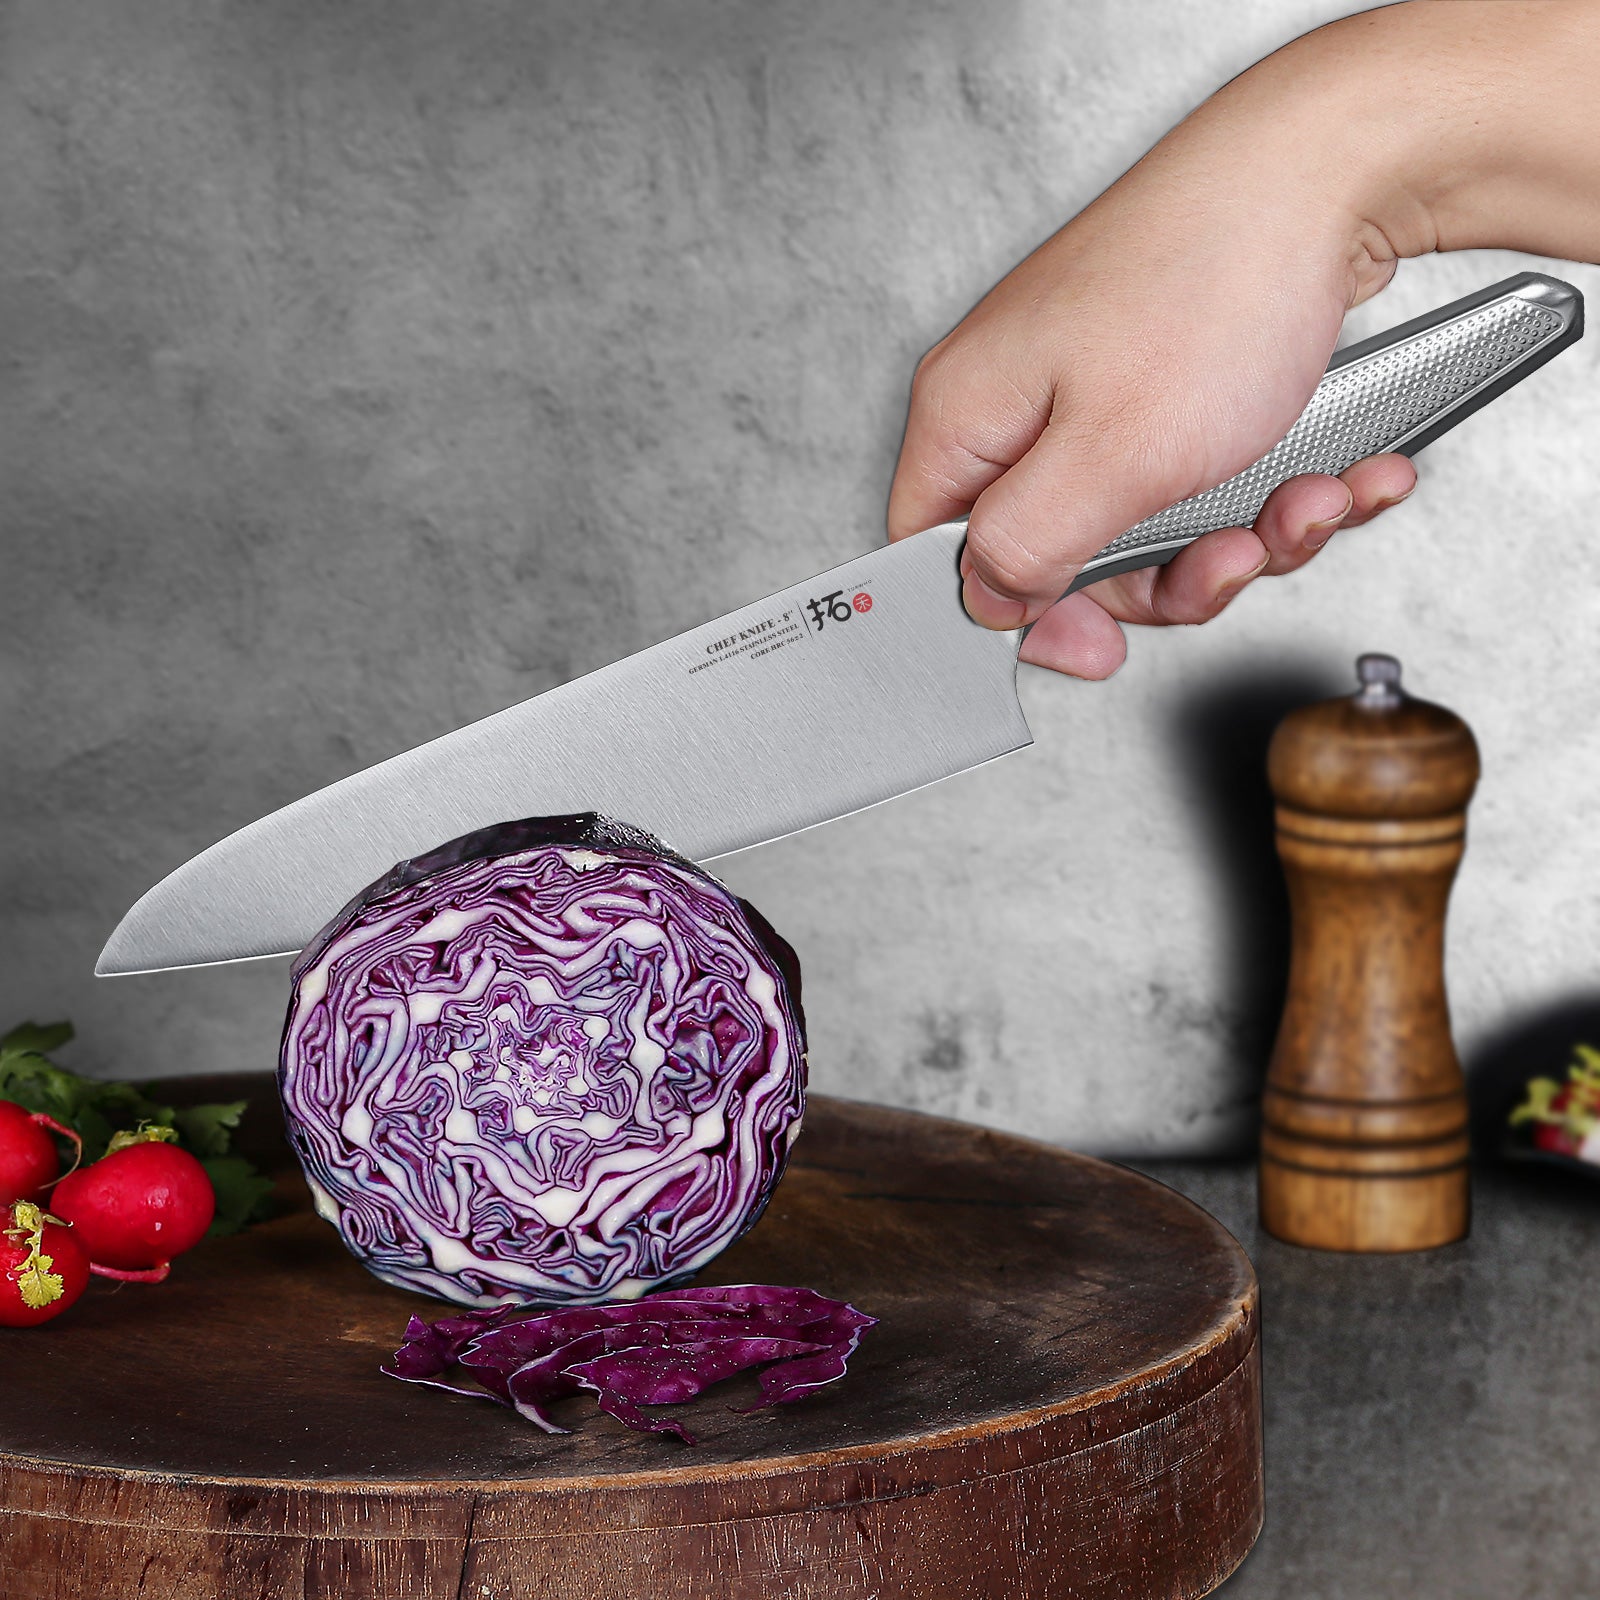 TURWHO 7PCS Japanese Damascus Steel Kitchen Knife Sets – Master Chef Knives